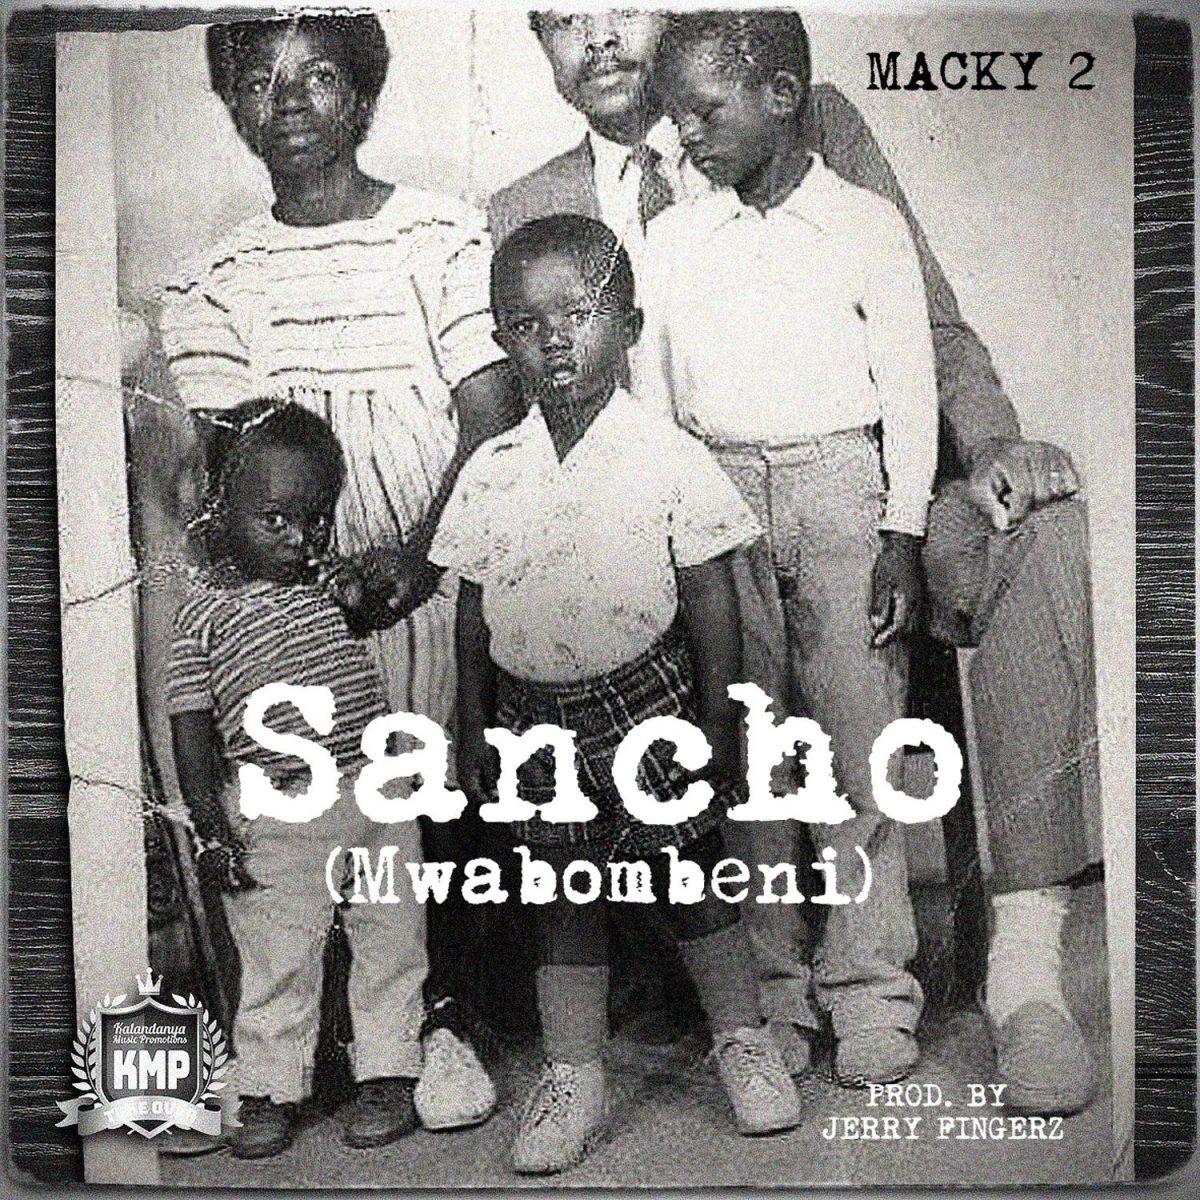 Macky 2 - Sancho (Mwabombeni)